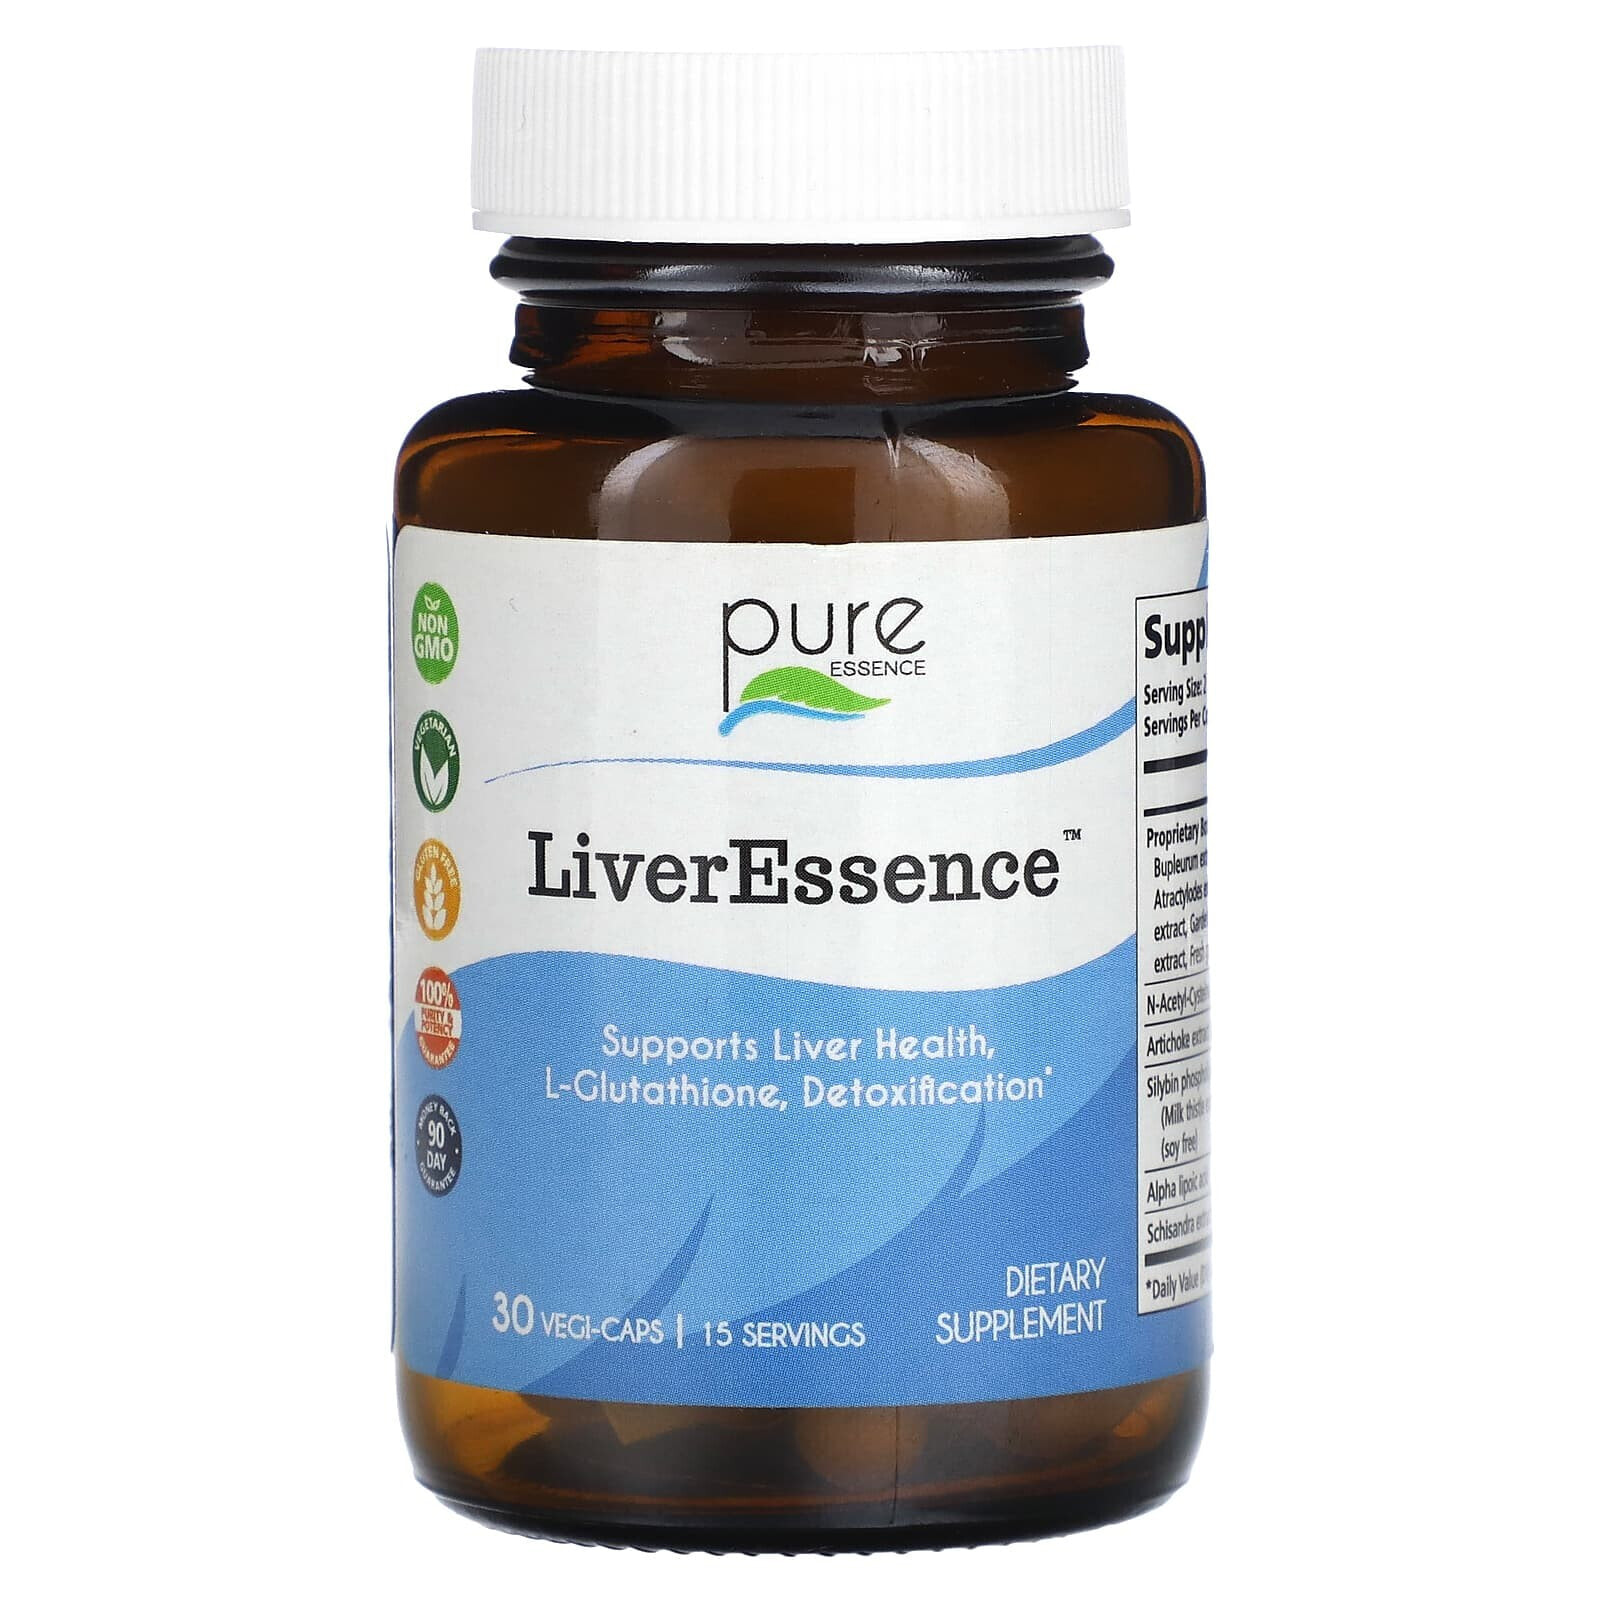 Pure Essence, LiverEssence, Поддержка печени 60 овощных капсул